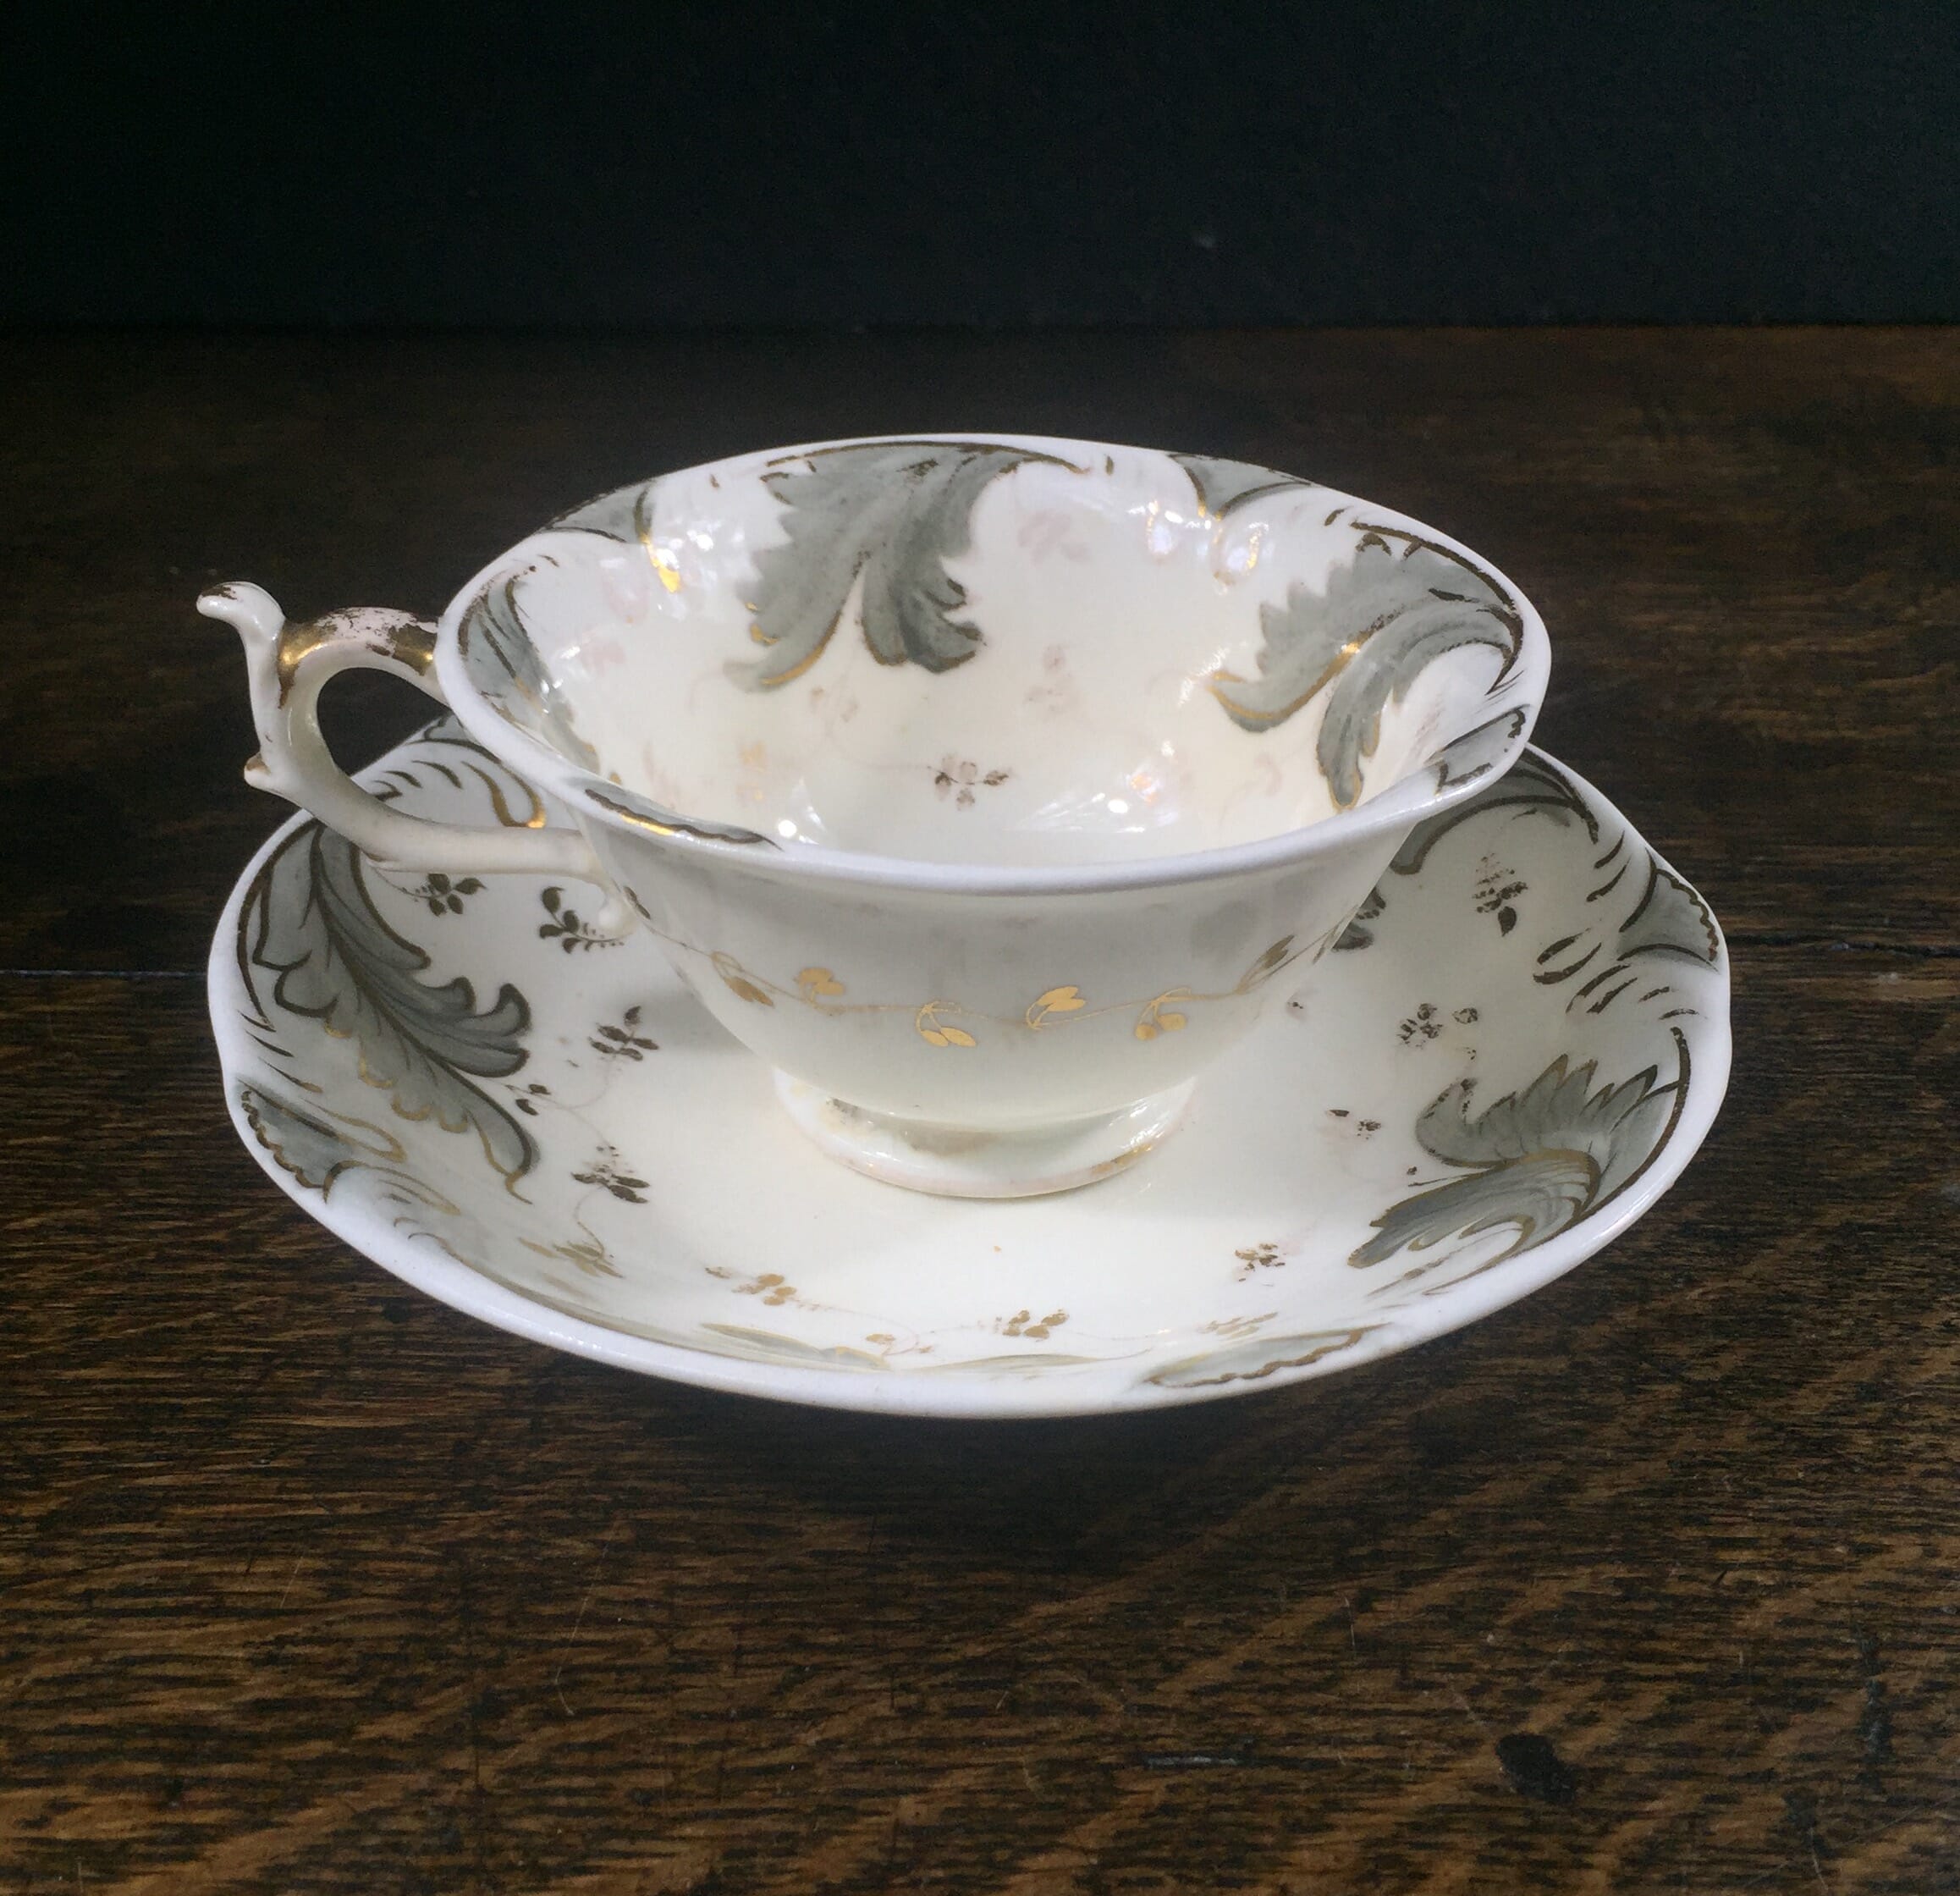 Rockingham teacup, grey foliage pattern #1168, c.1830-0